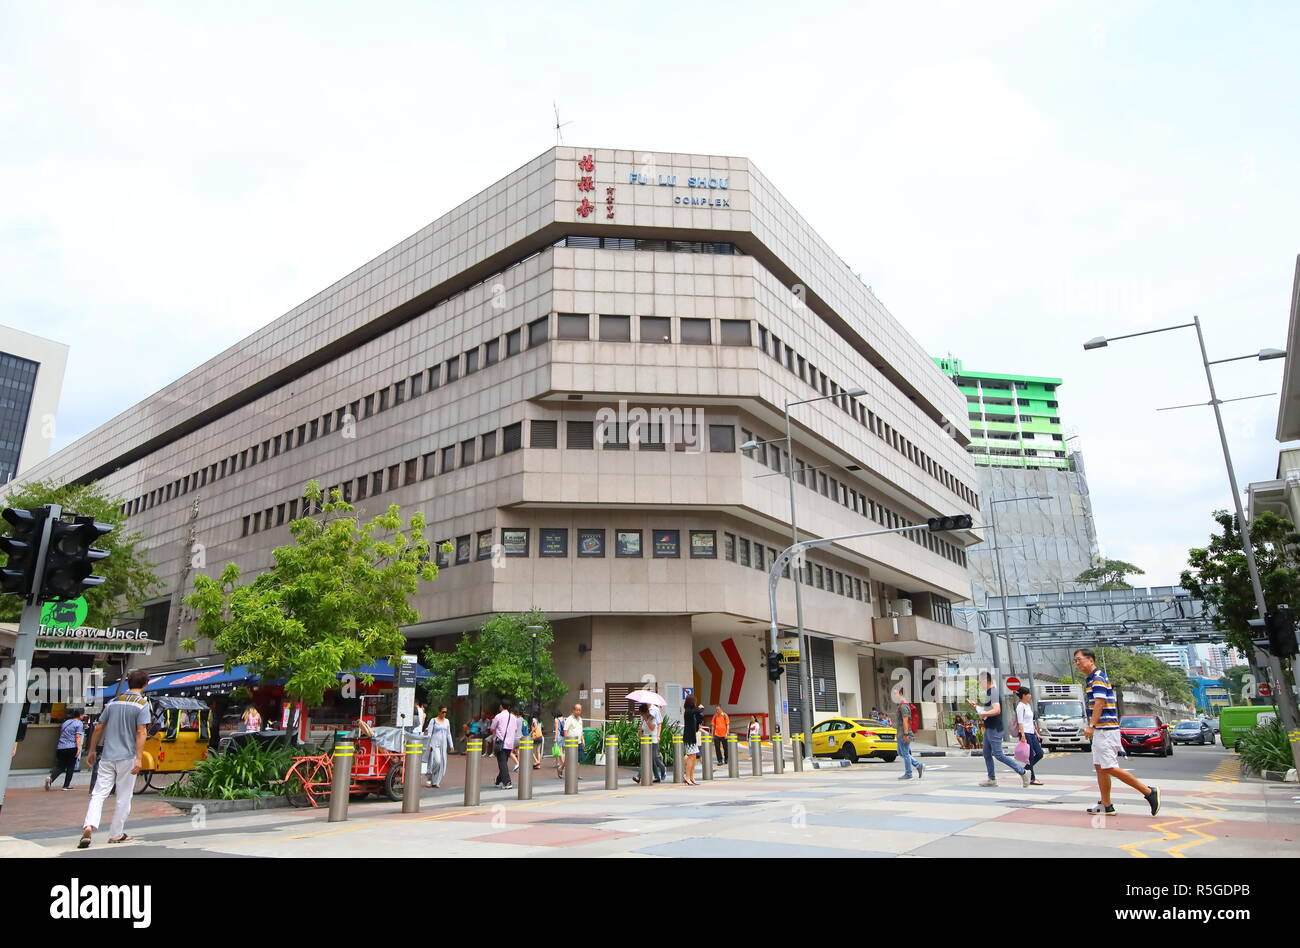 People visit Fu Lu Shou shopping mall in Singapore Stock Photo - Alamy